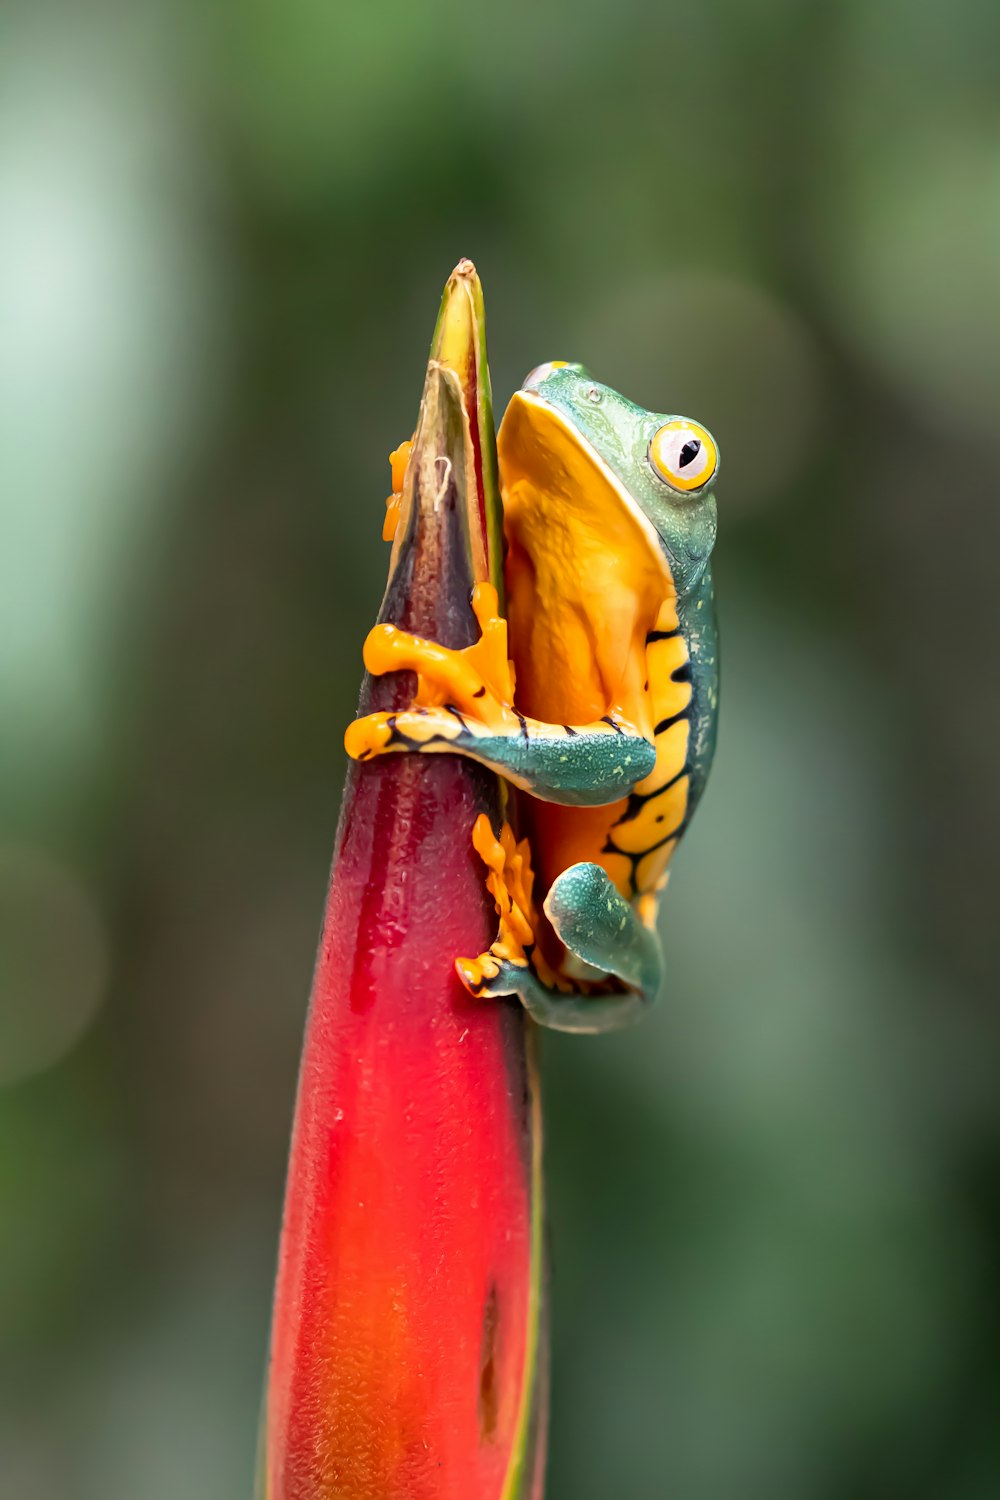 yellow frog on red metal bar